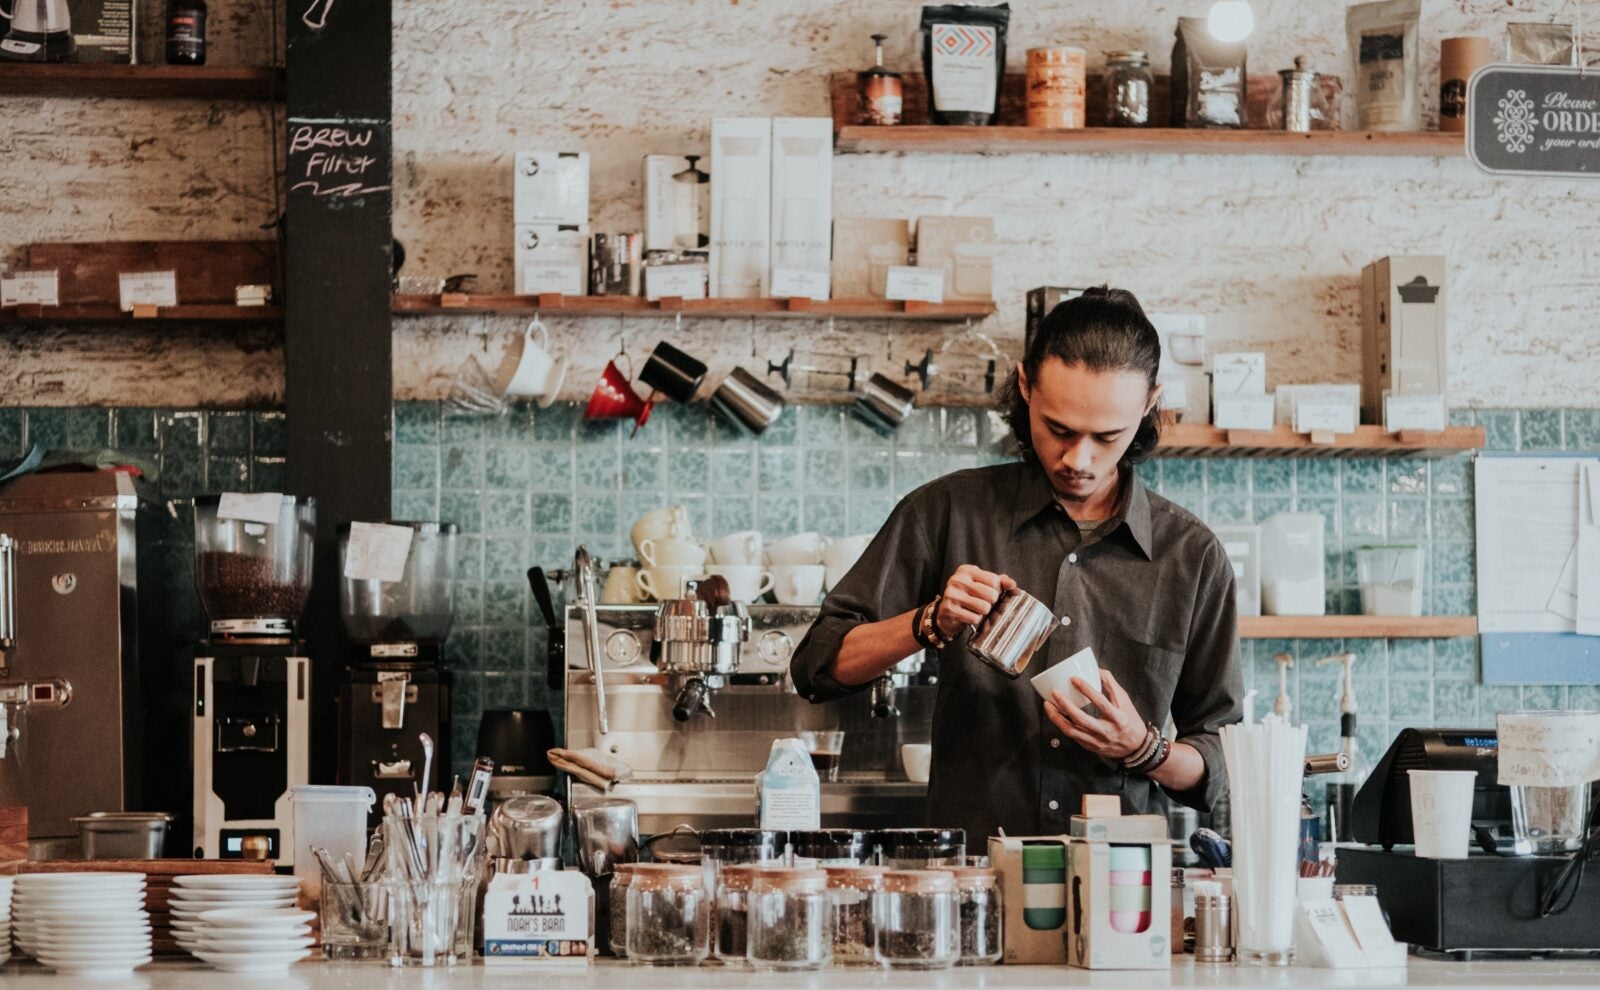 A local man pouring coffee as a barista